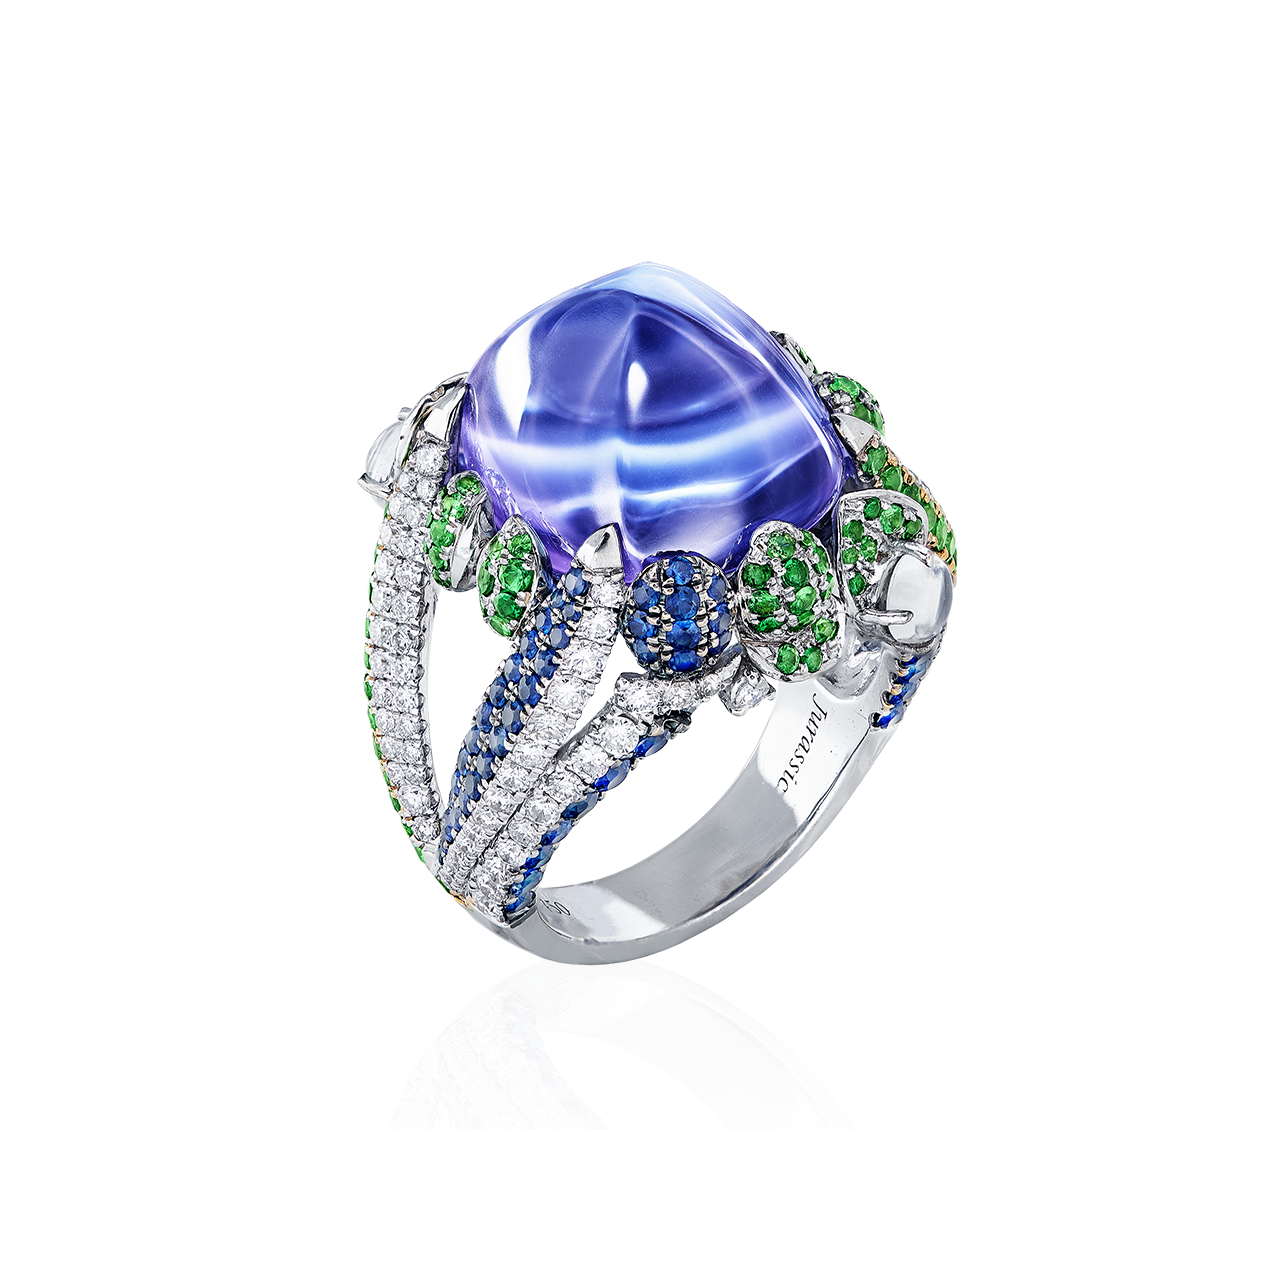 18.98克拉 天然丹泉石鑽戒
Tanzanite, Multi-colored Gemstone 
and Diamond Ring